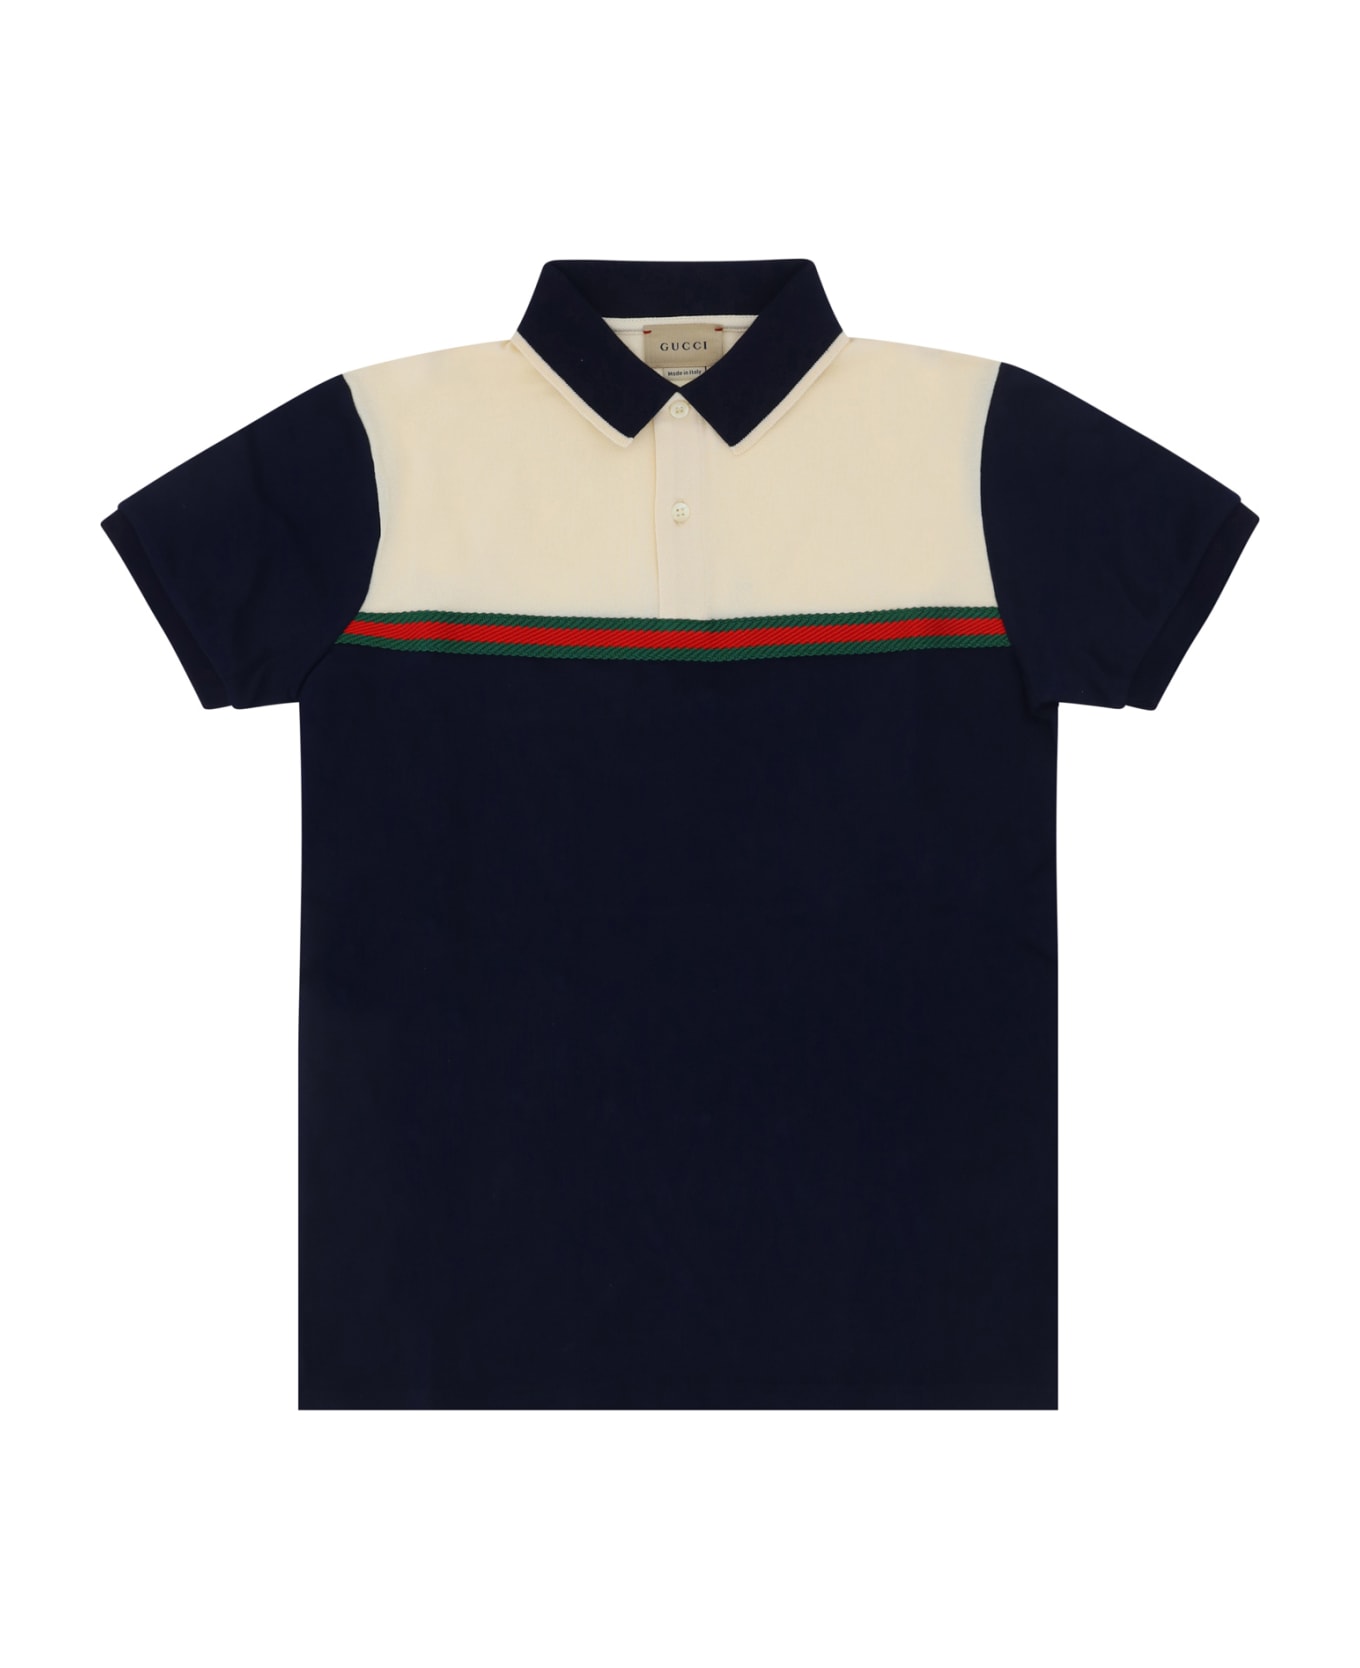 Gucci: Big Boy Polo Shirt – Stush Fashionista